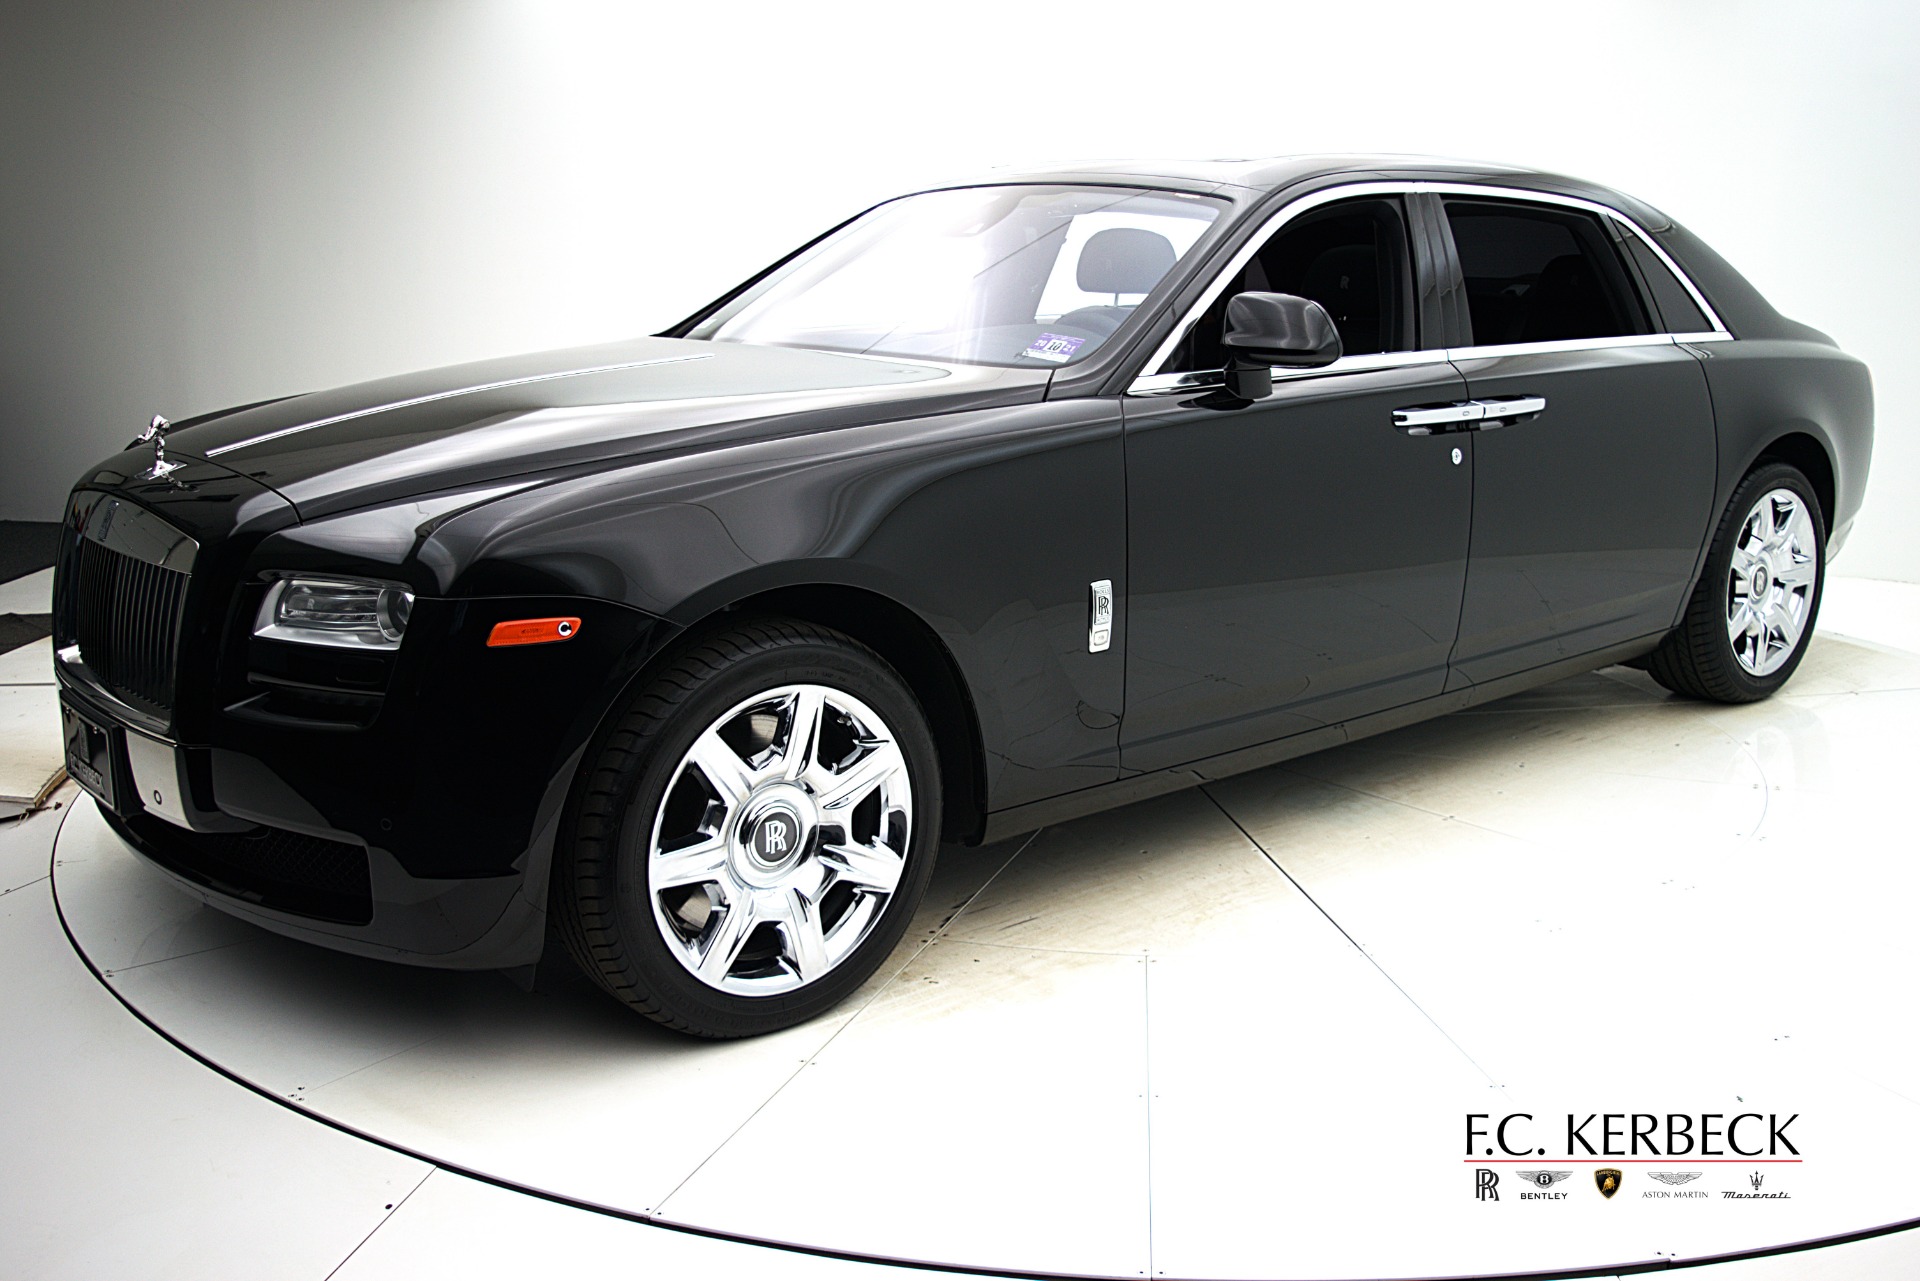 Used 2012 Rolls-Royce Ghost EWB for sale Sold at Bentley Palmyra N.J. in Palmyra NJ 08065 2